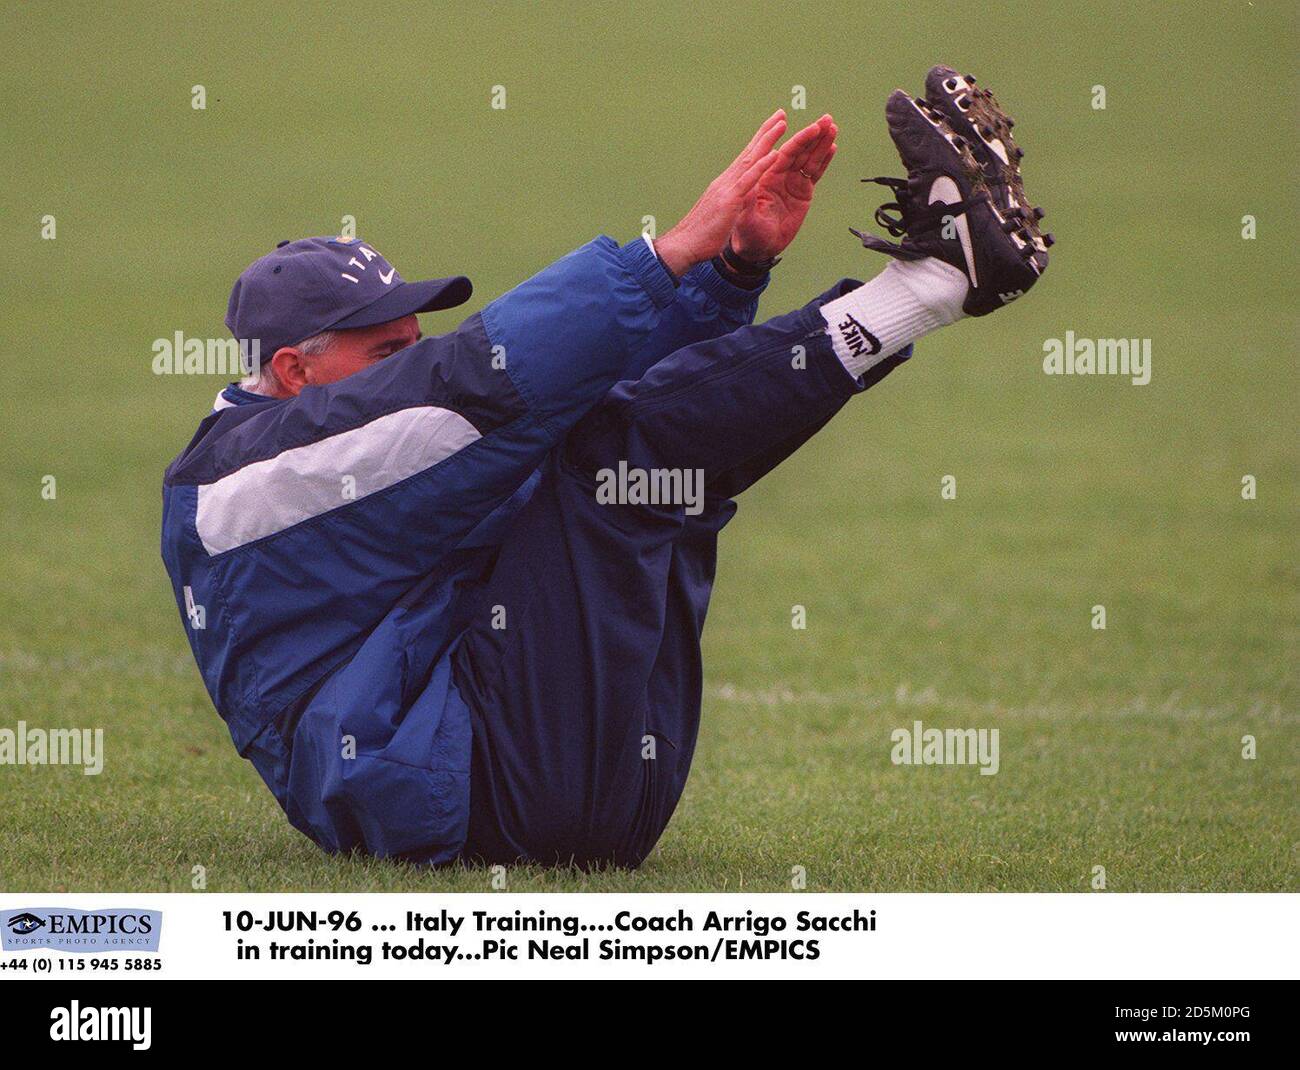 10-JUN-96 ... Italy Training. Coach Arrigo Sacchi in training today Stock  Photo - Alamy